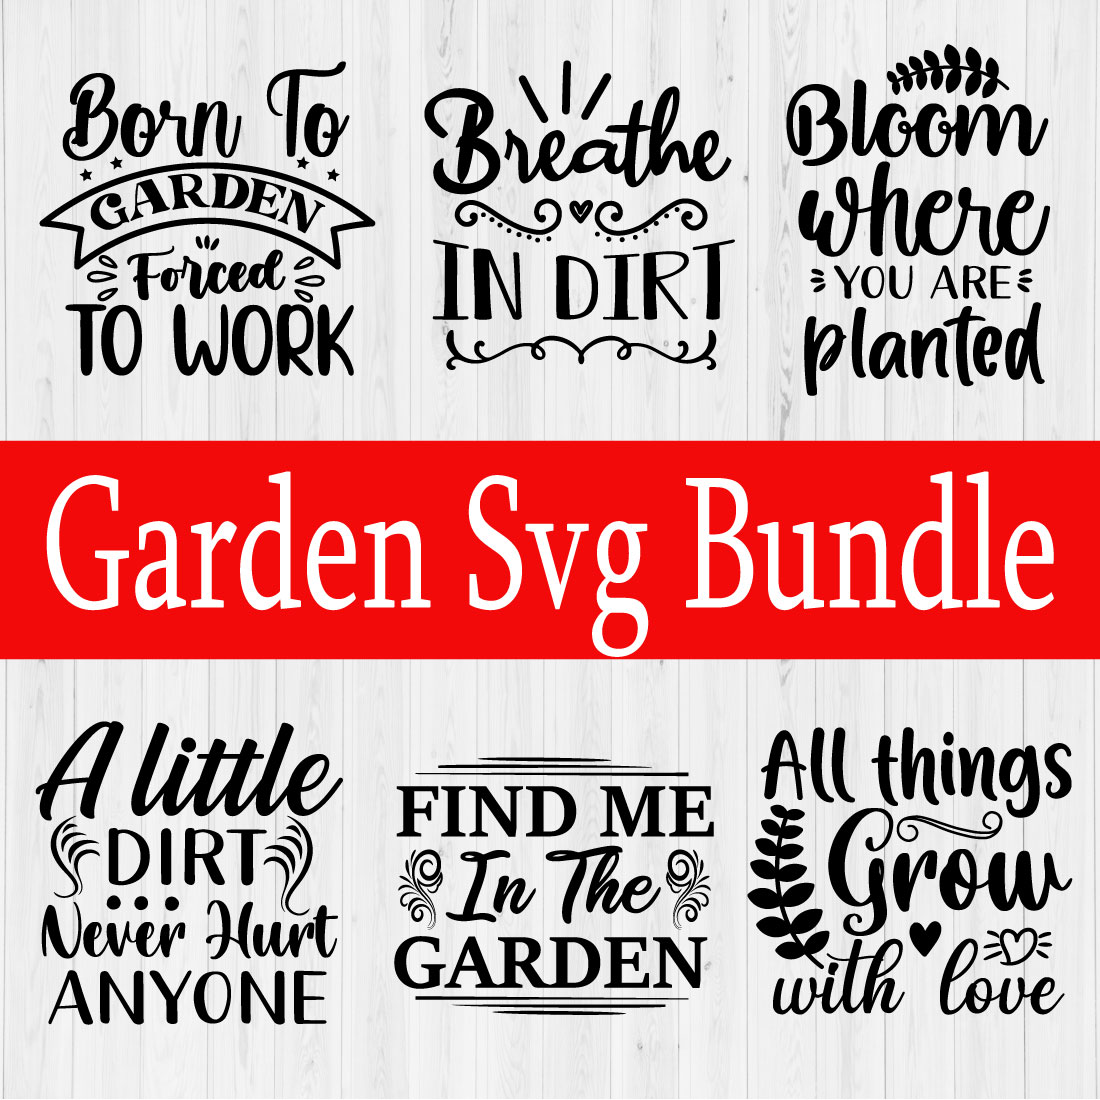 Garden Svg Bundle Vol1 preview image.